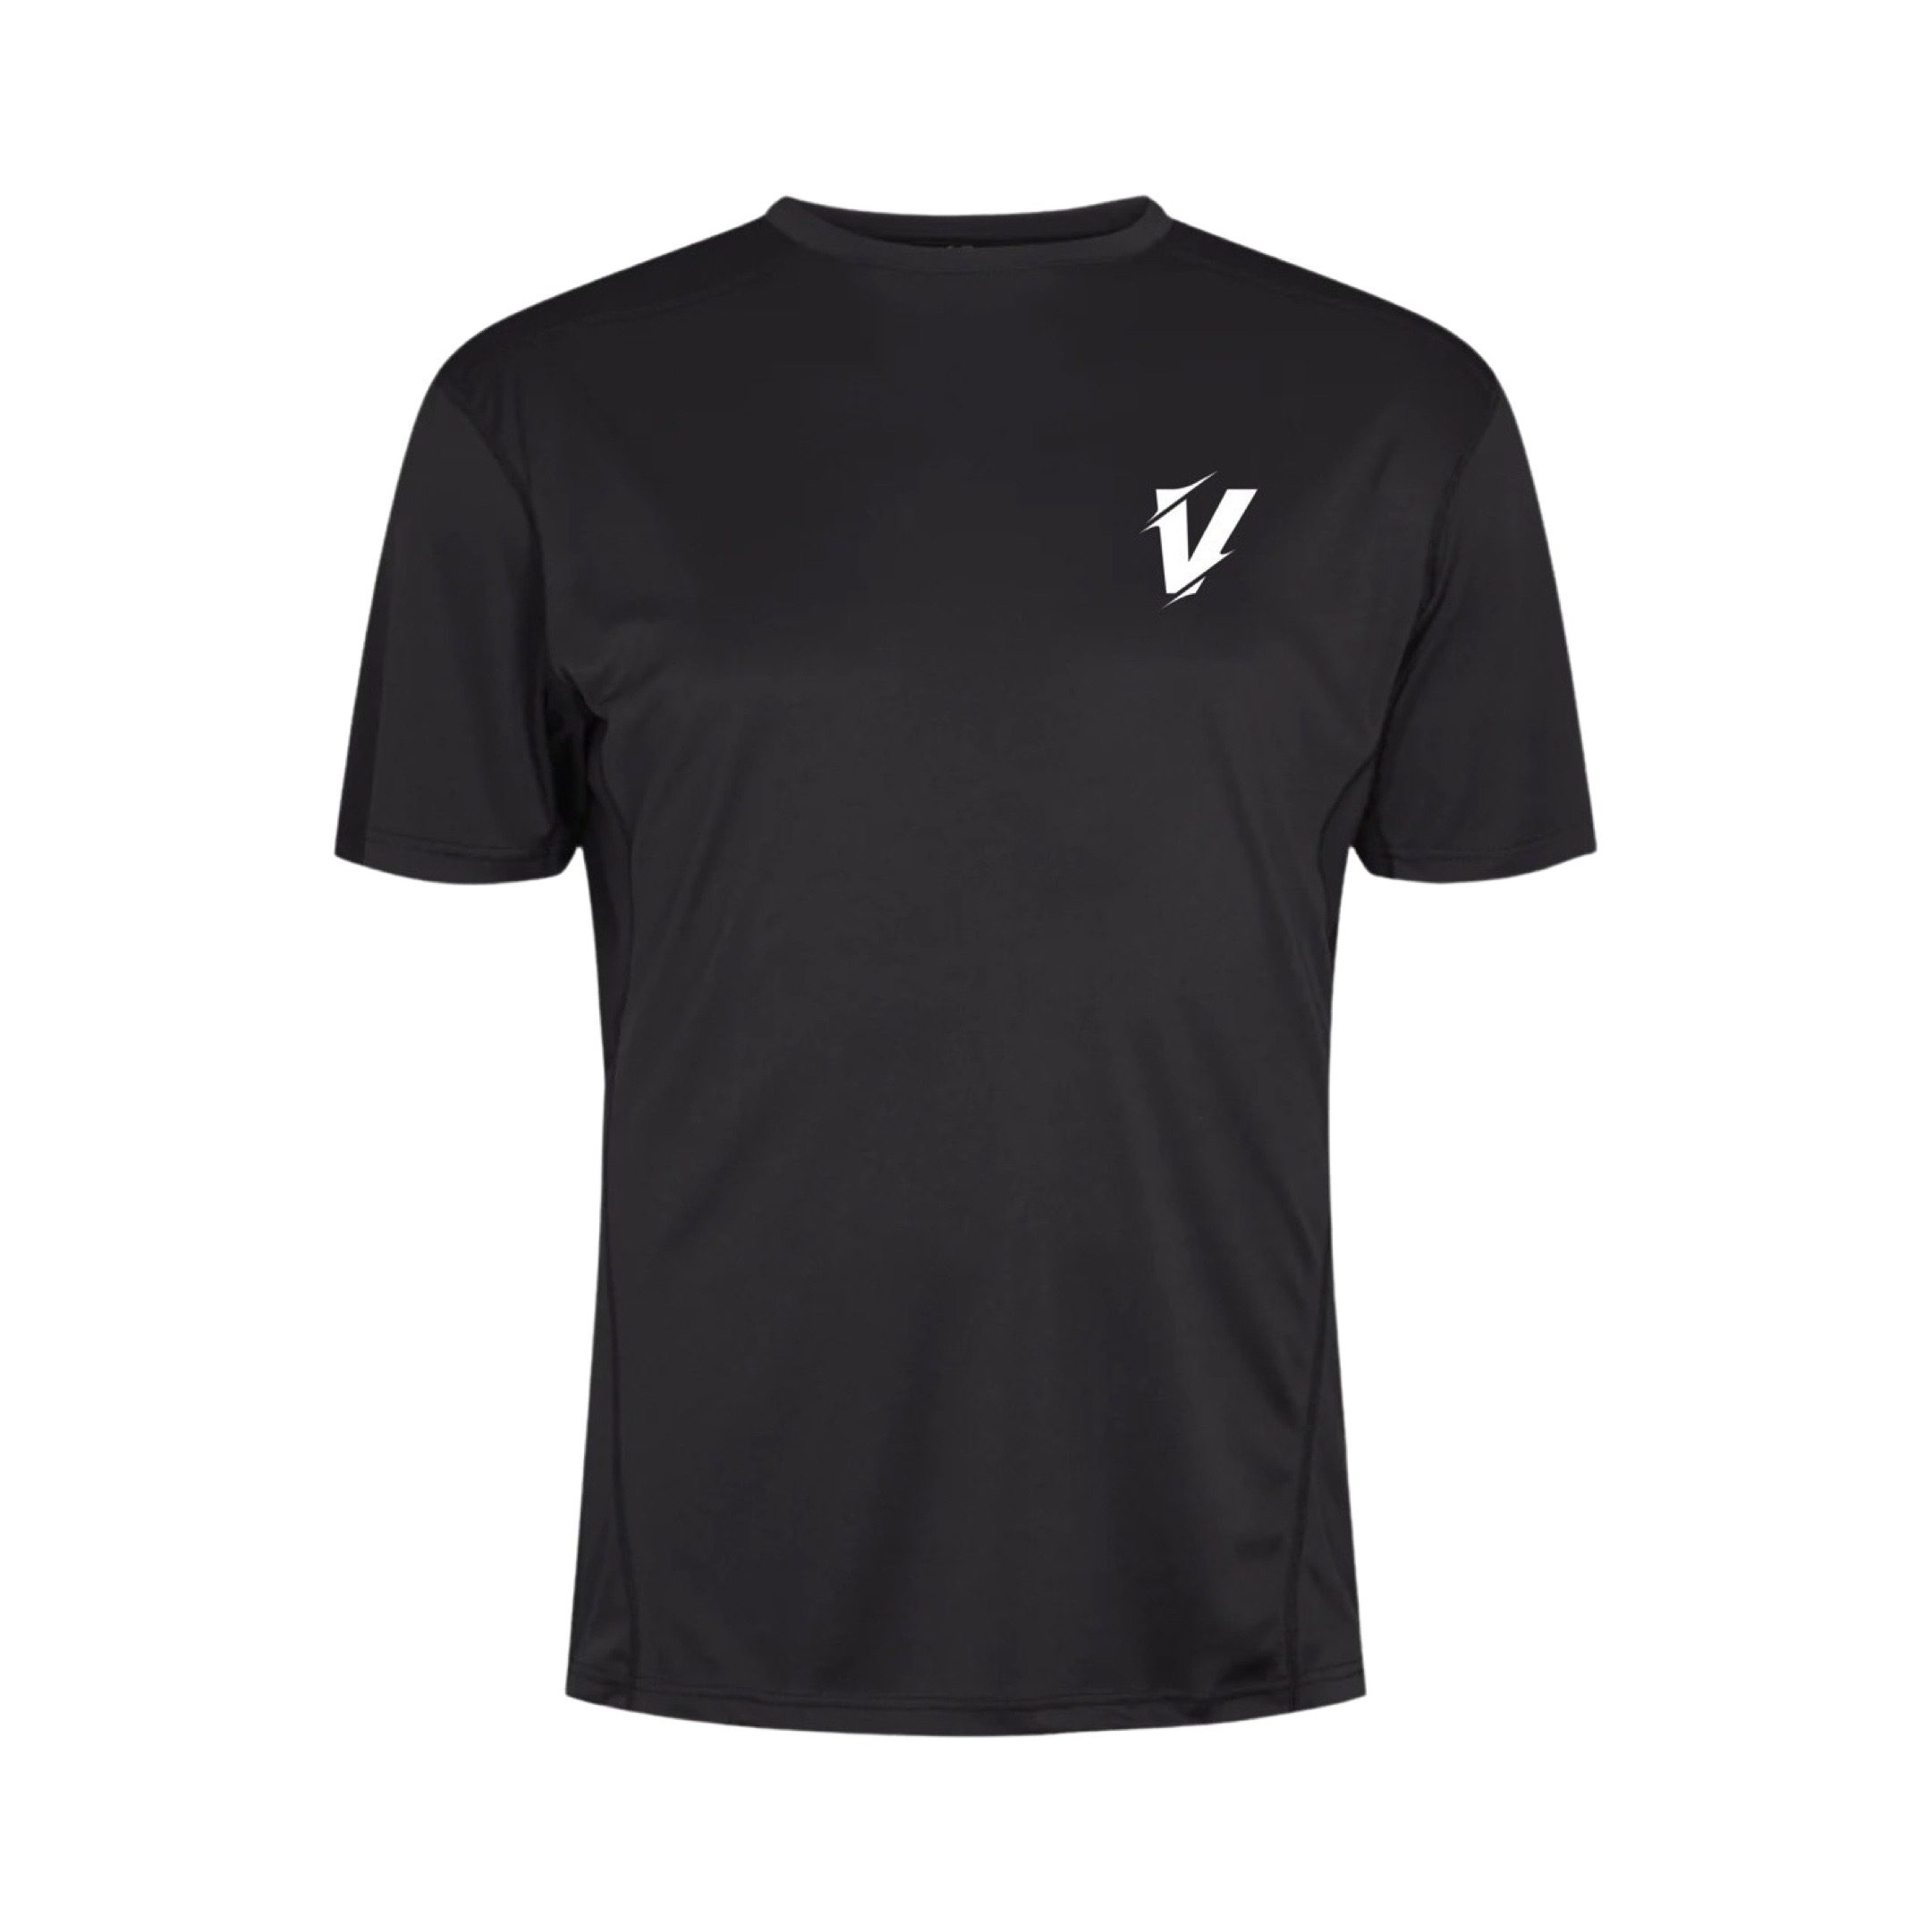 VGK Performance T-shirt